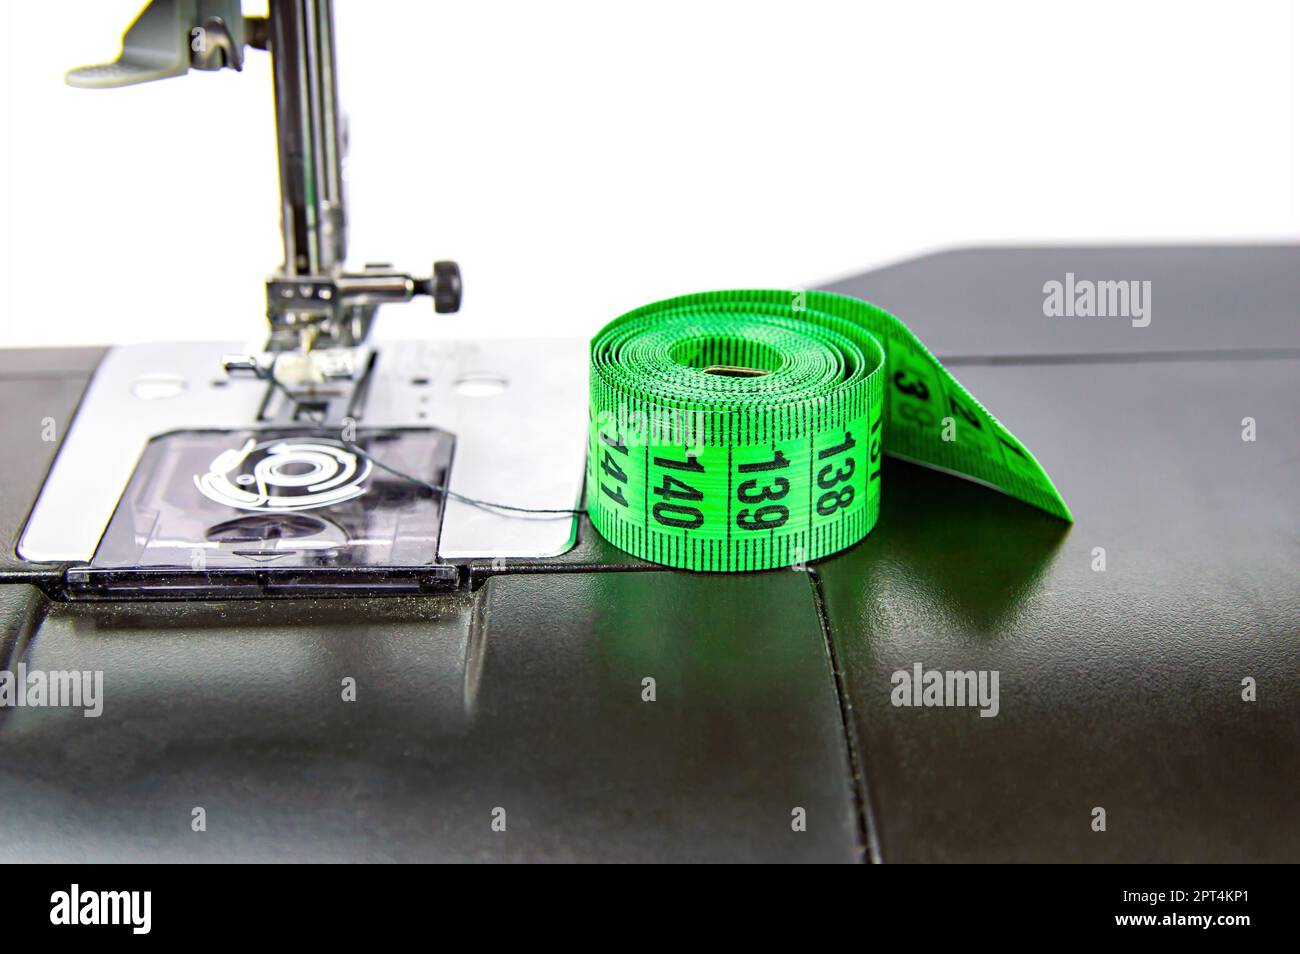 https://c8.alamy.com/comp/2PT4KP1/tailors-measuring-meter-on-a-sewing-machine-measuring-tool-seamstress-meter-sewing-machine-clothing-size-seamstress-equipment-working-profession-2PT4KP1.jpg